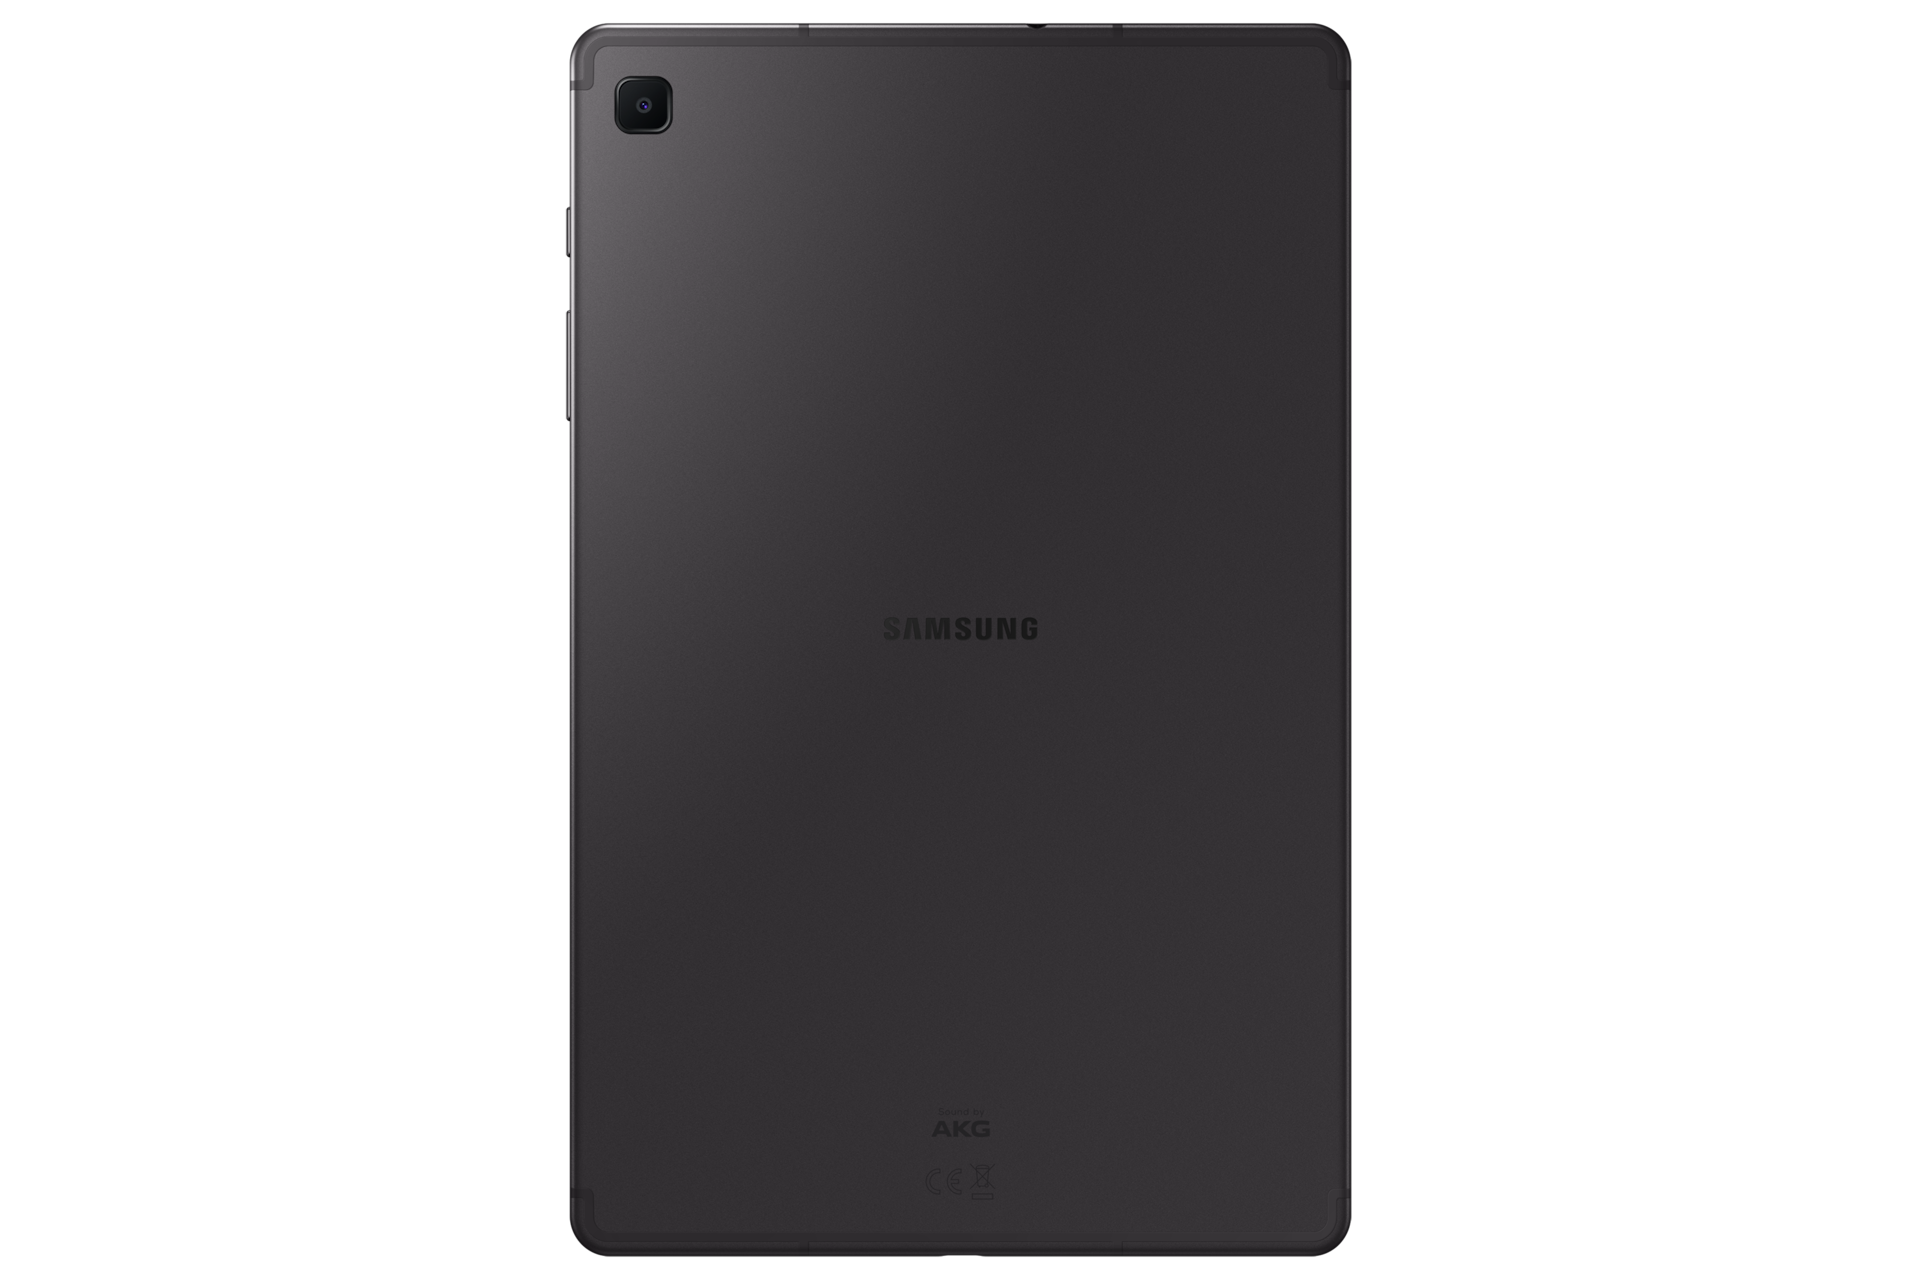 Samsung Galaxy Tab S6 Lite (2022) Tablet 2022 edition S Pen TFT